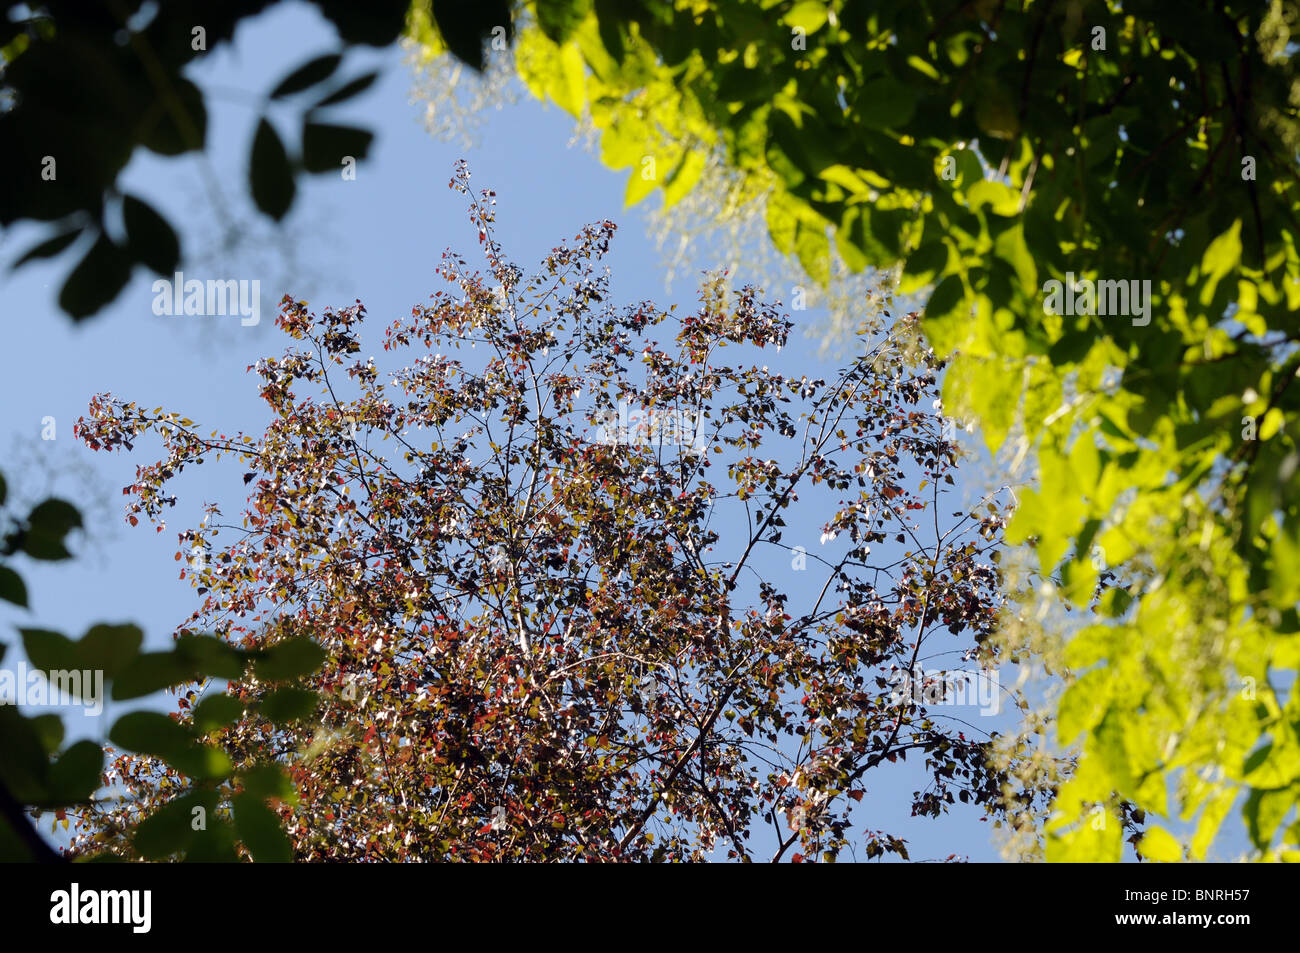 Betula pendula Roth "Purpurea" - Silver Birch tree - variety with dark purple leaves Stock Photo